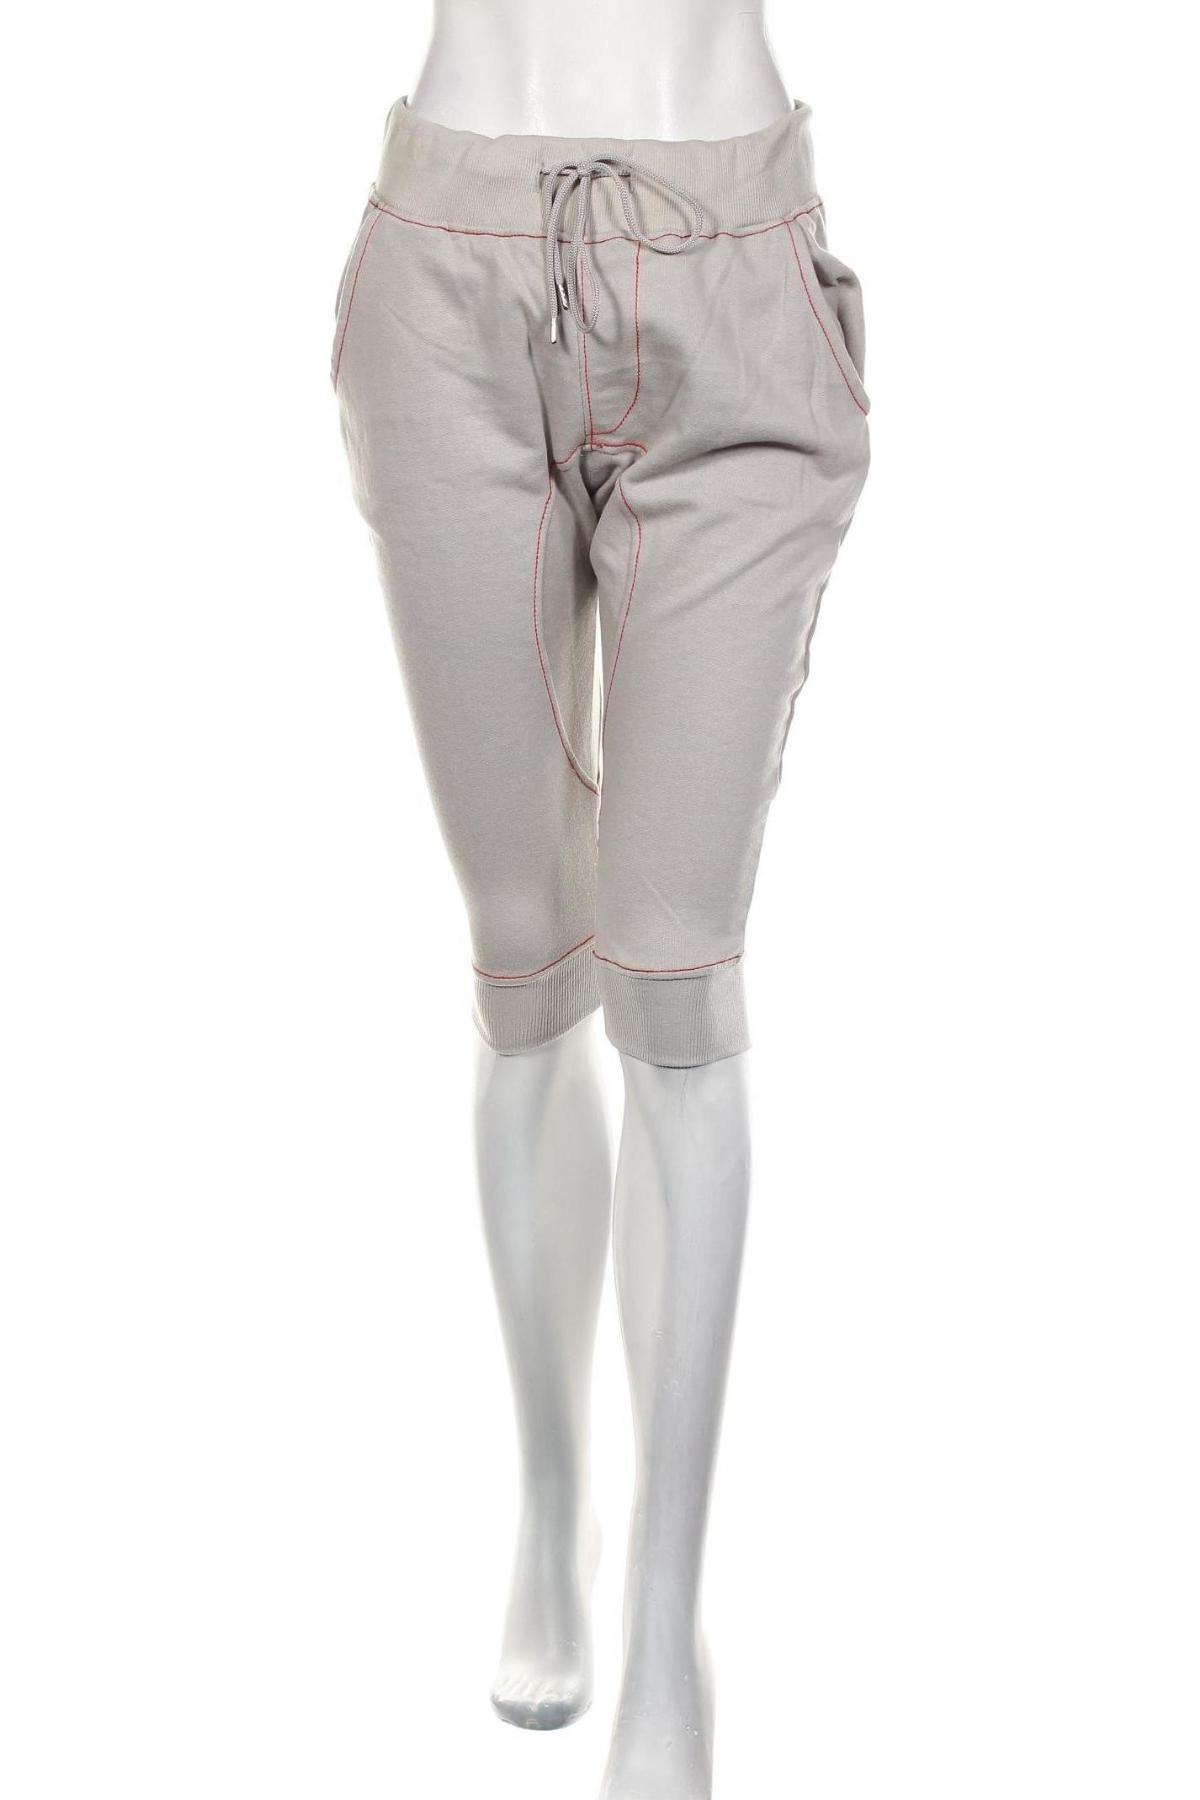 Damen Sporthose American People, Größe M, Farbe Grau, Baumwolle, Preis 19,28 €